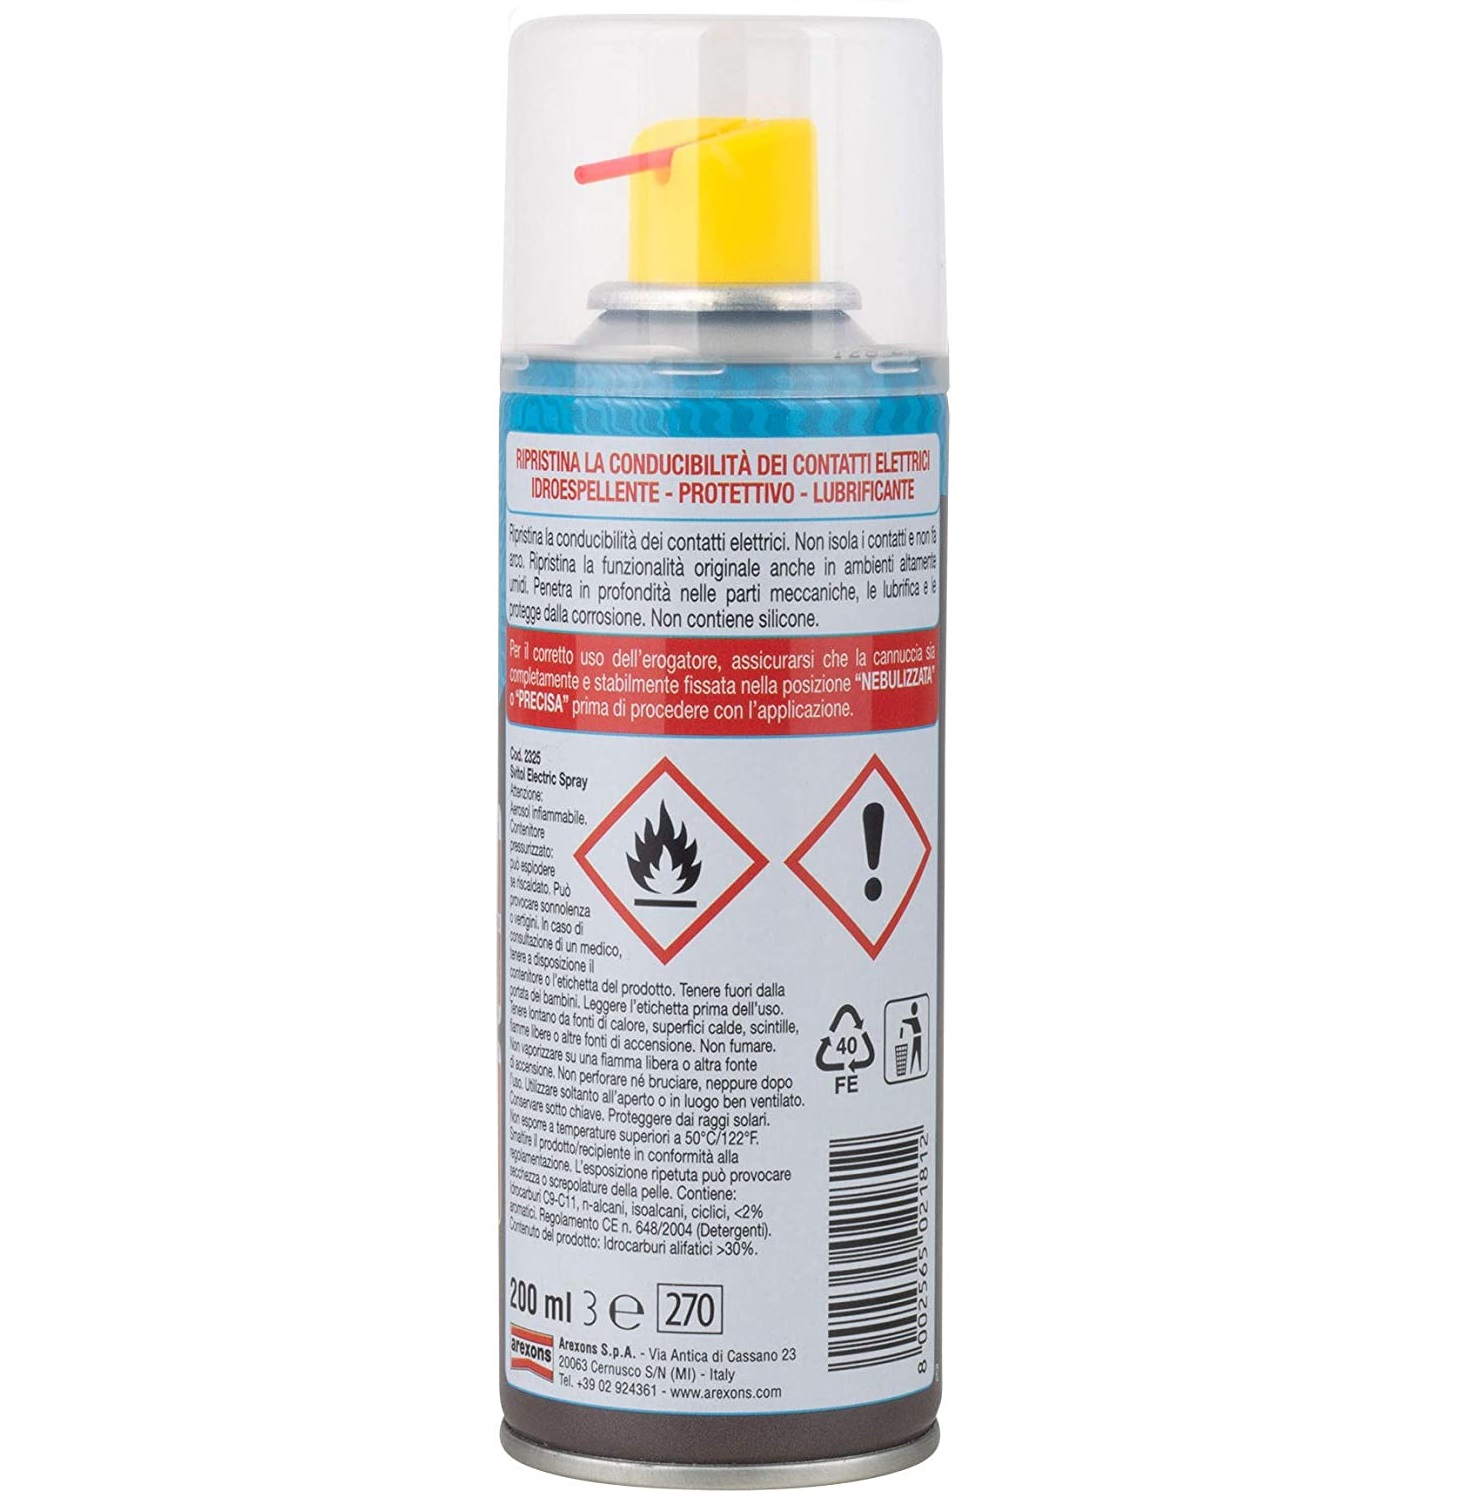 Grasso spray al Litio VMD 27 ml400 - Cod. 27 - ToolShop Italia